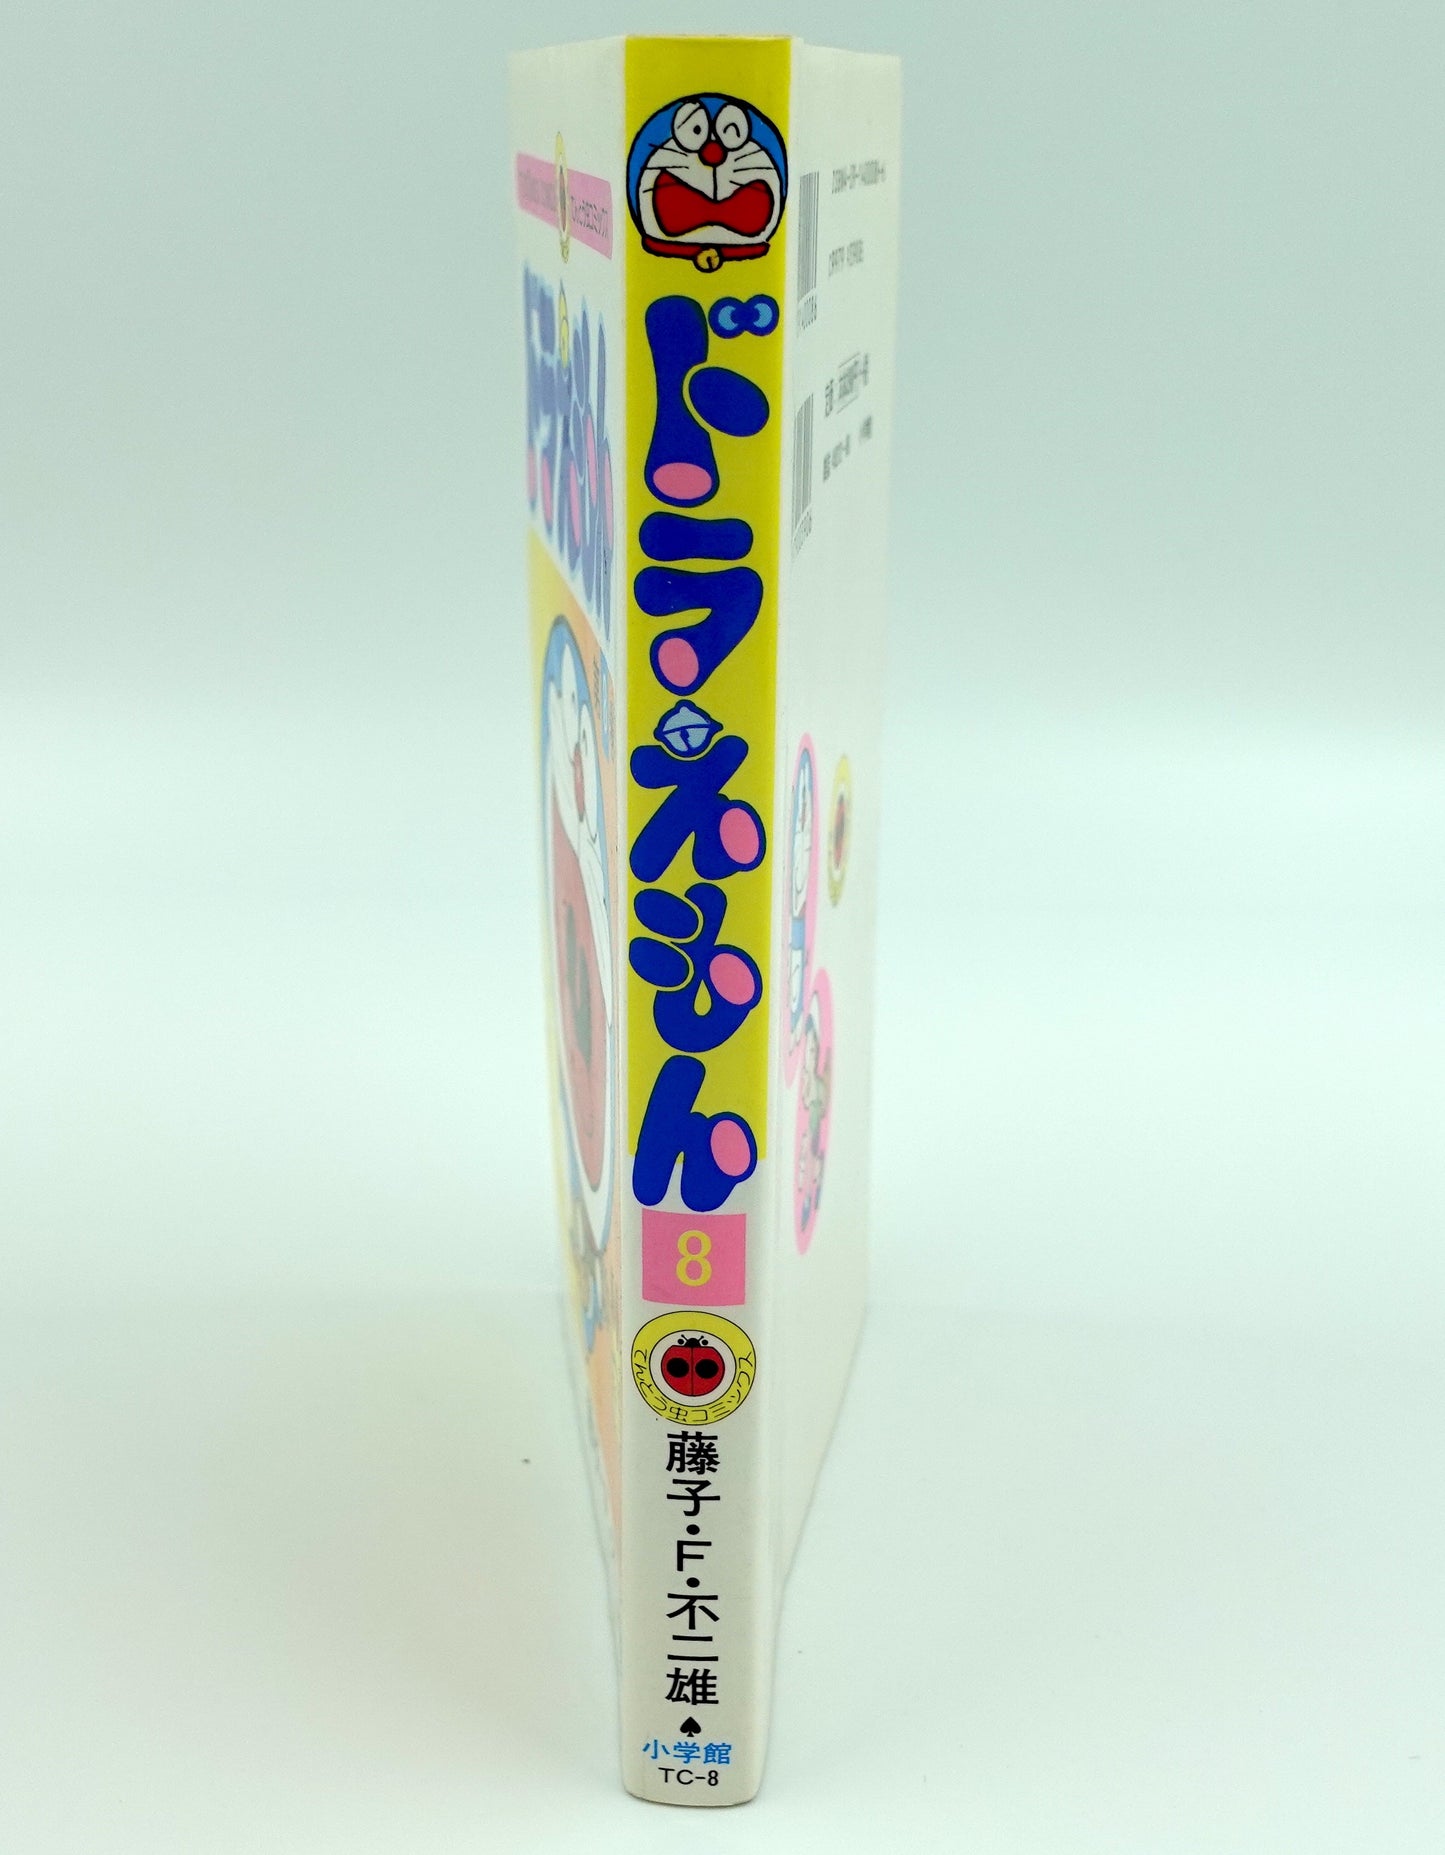 Doraemon Vol.8- Official Japanese Edition